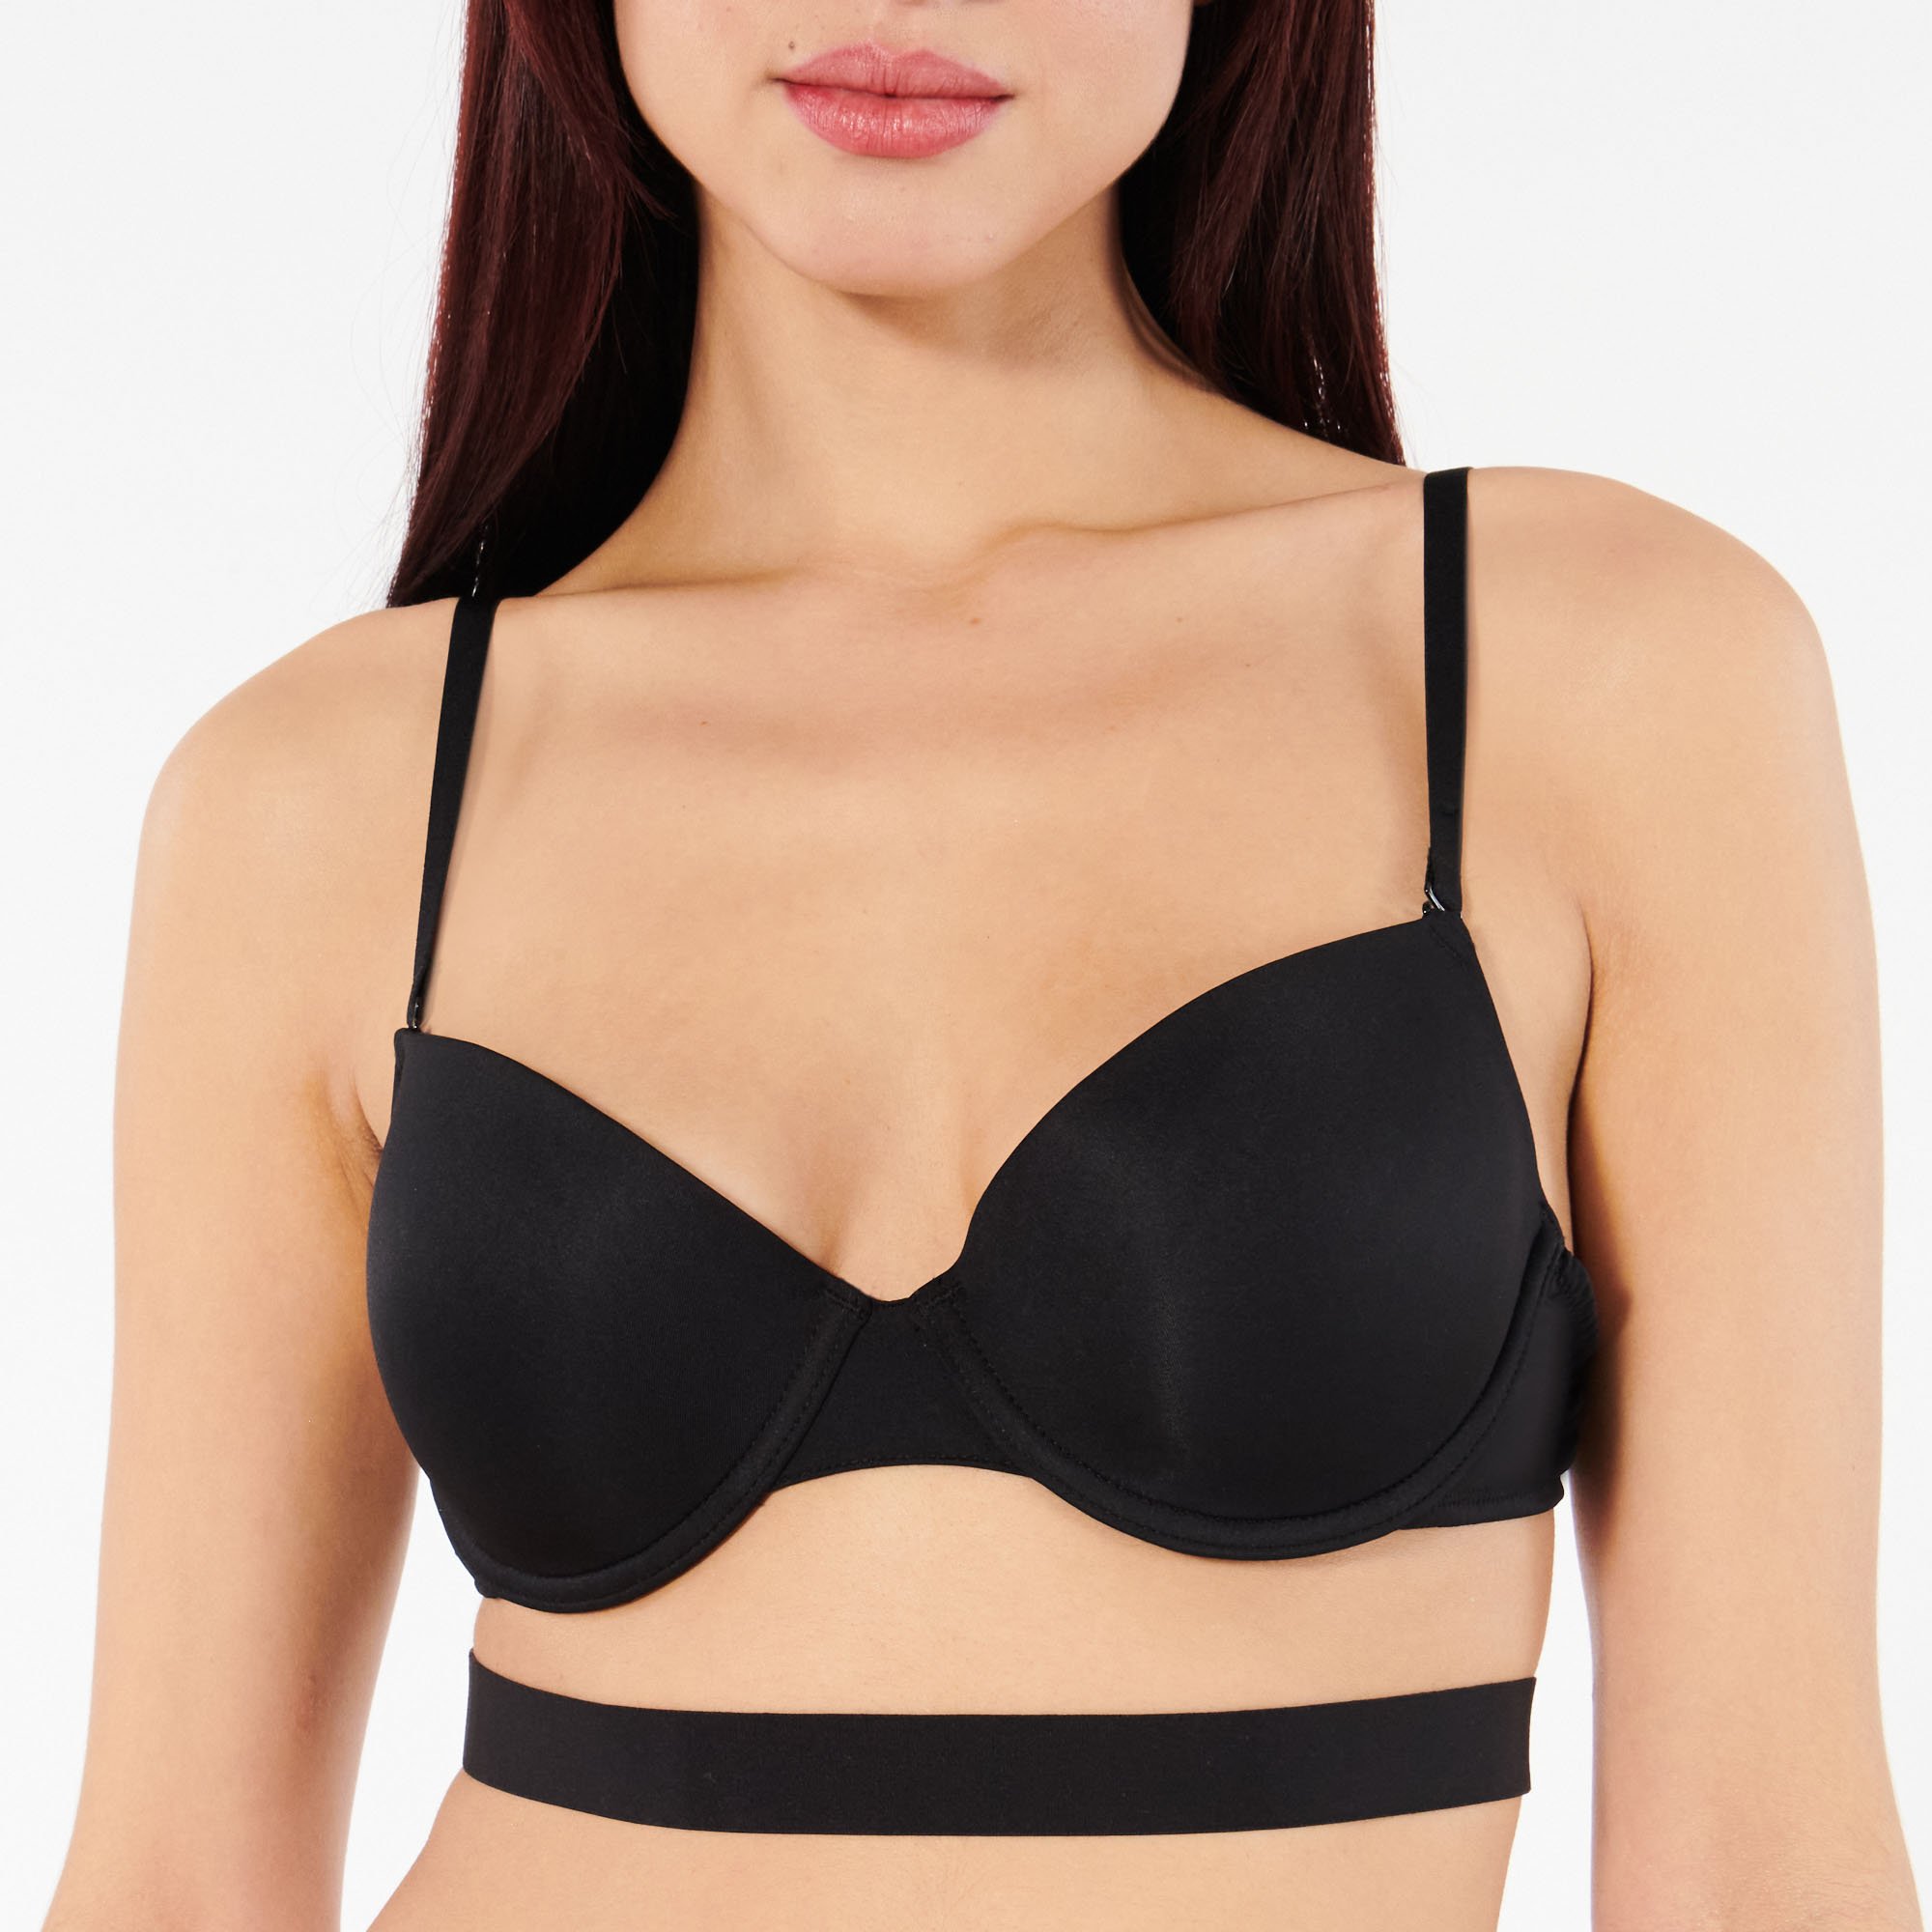 Lace push-up bra with satin straps - black - black - Undiz